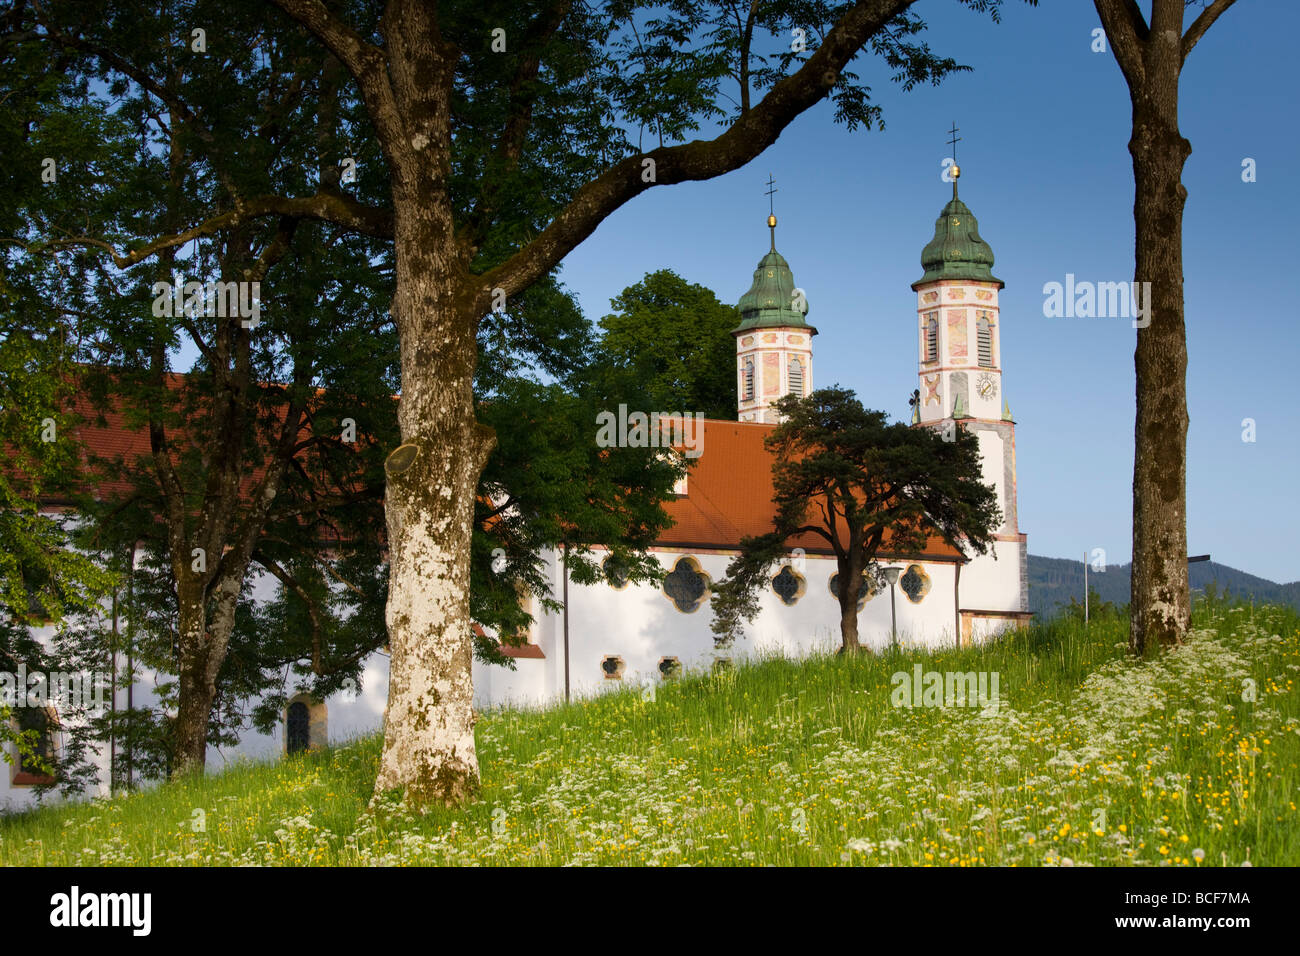 Germany, Bayern/Bavaria, Bad Tolz, Hillside church Stock Photo